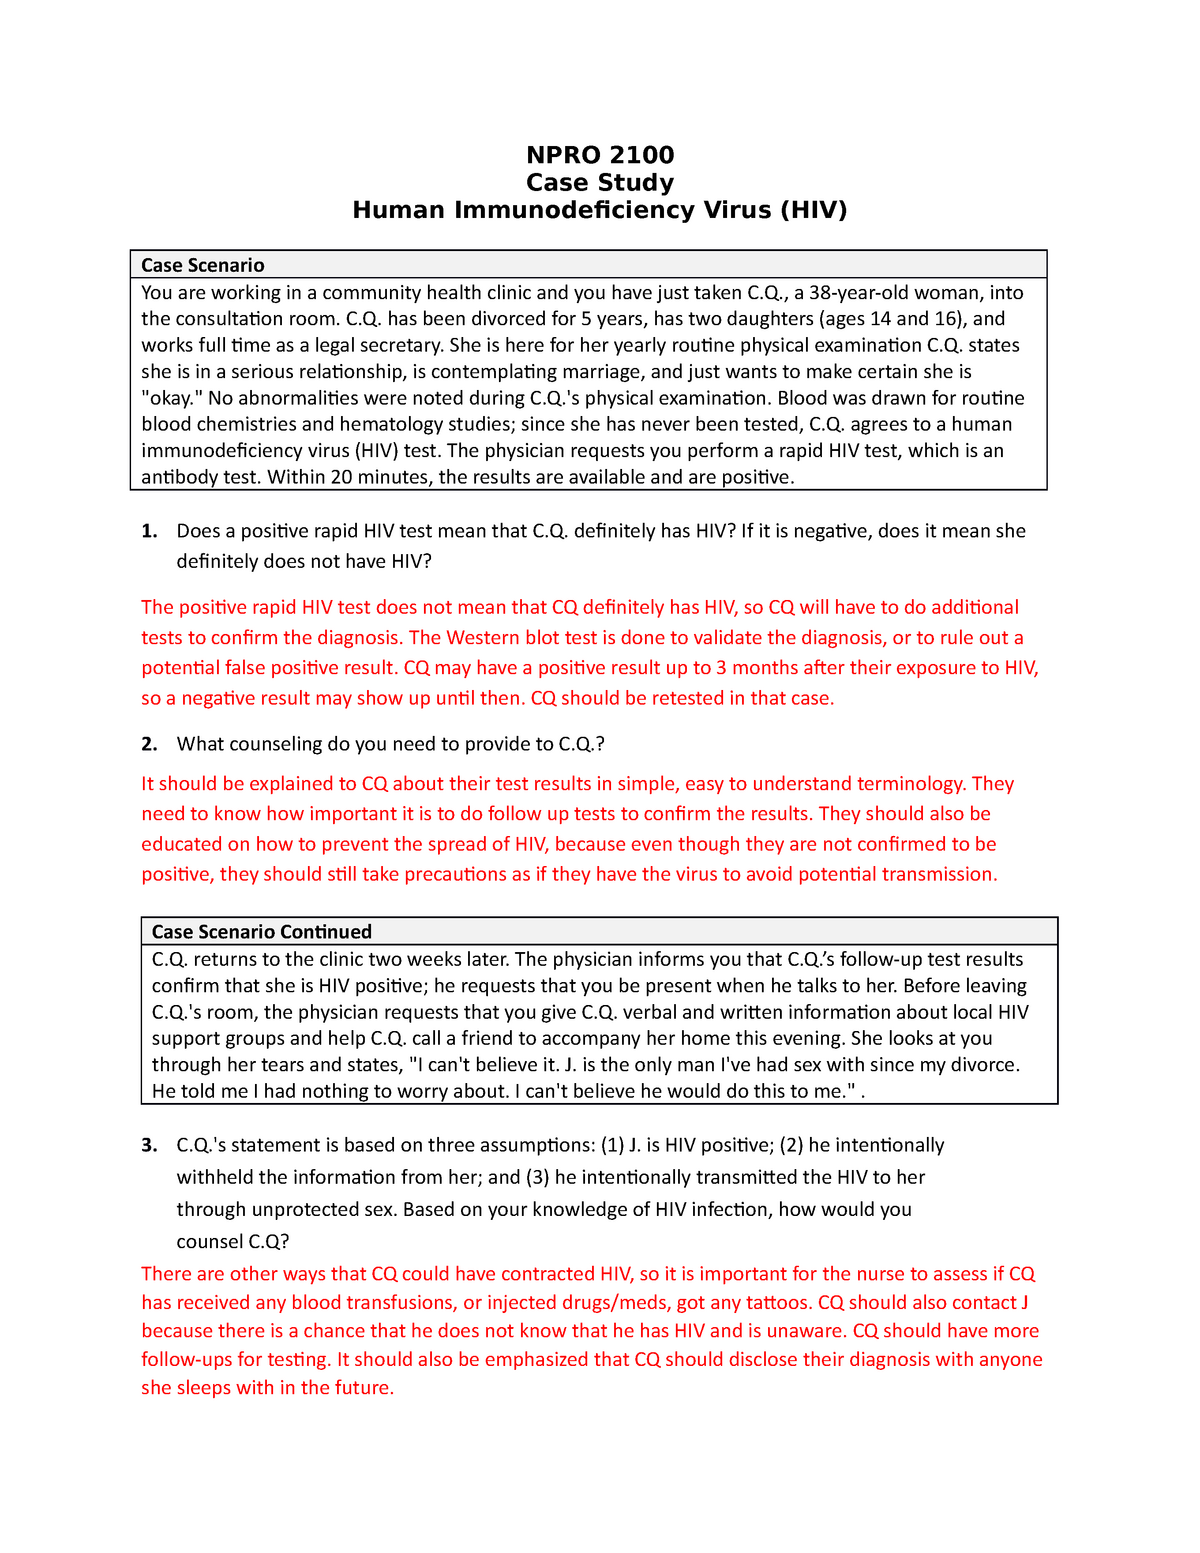 hiv case study examples